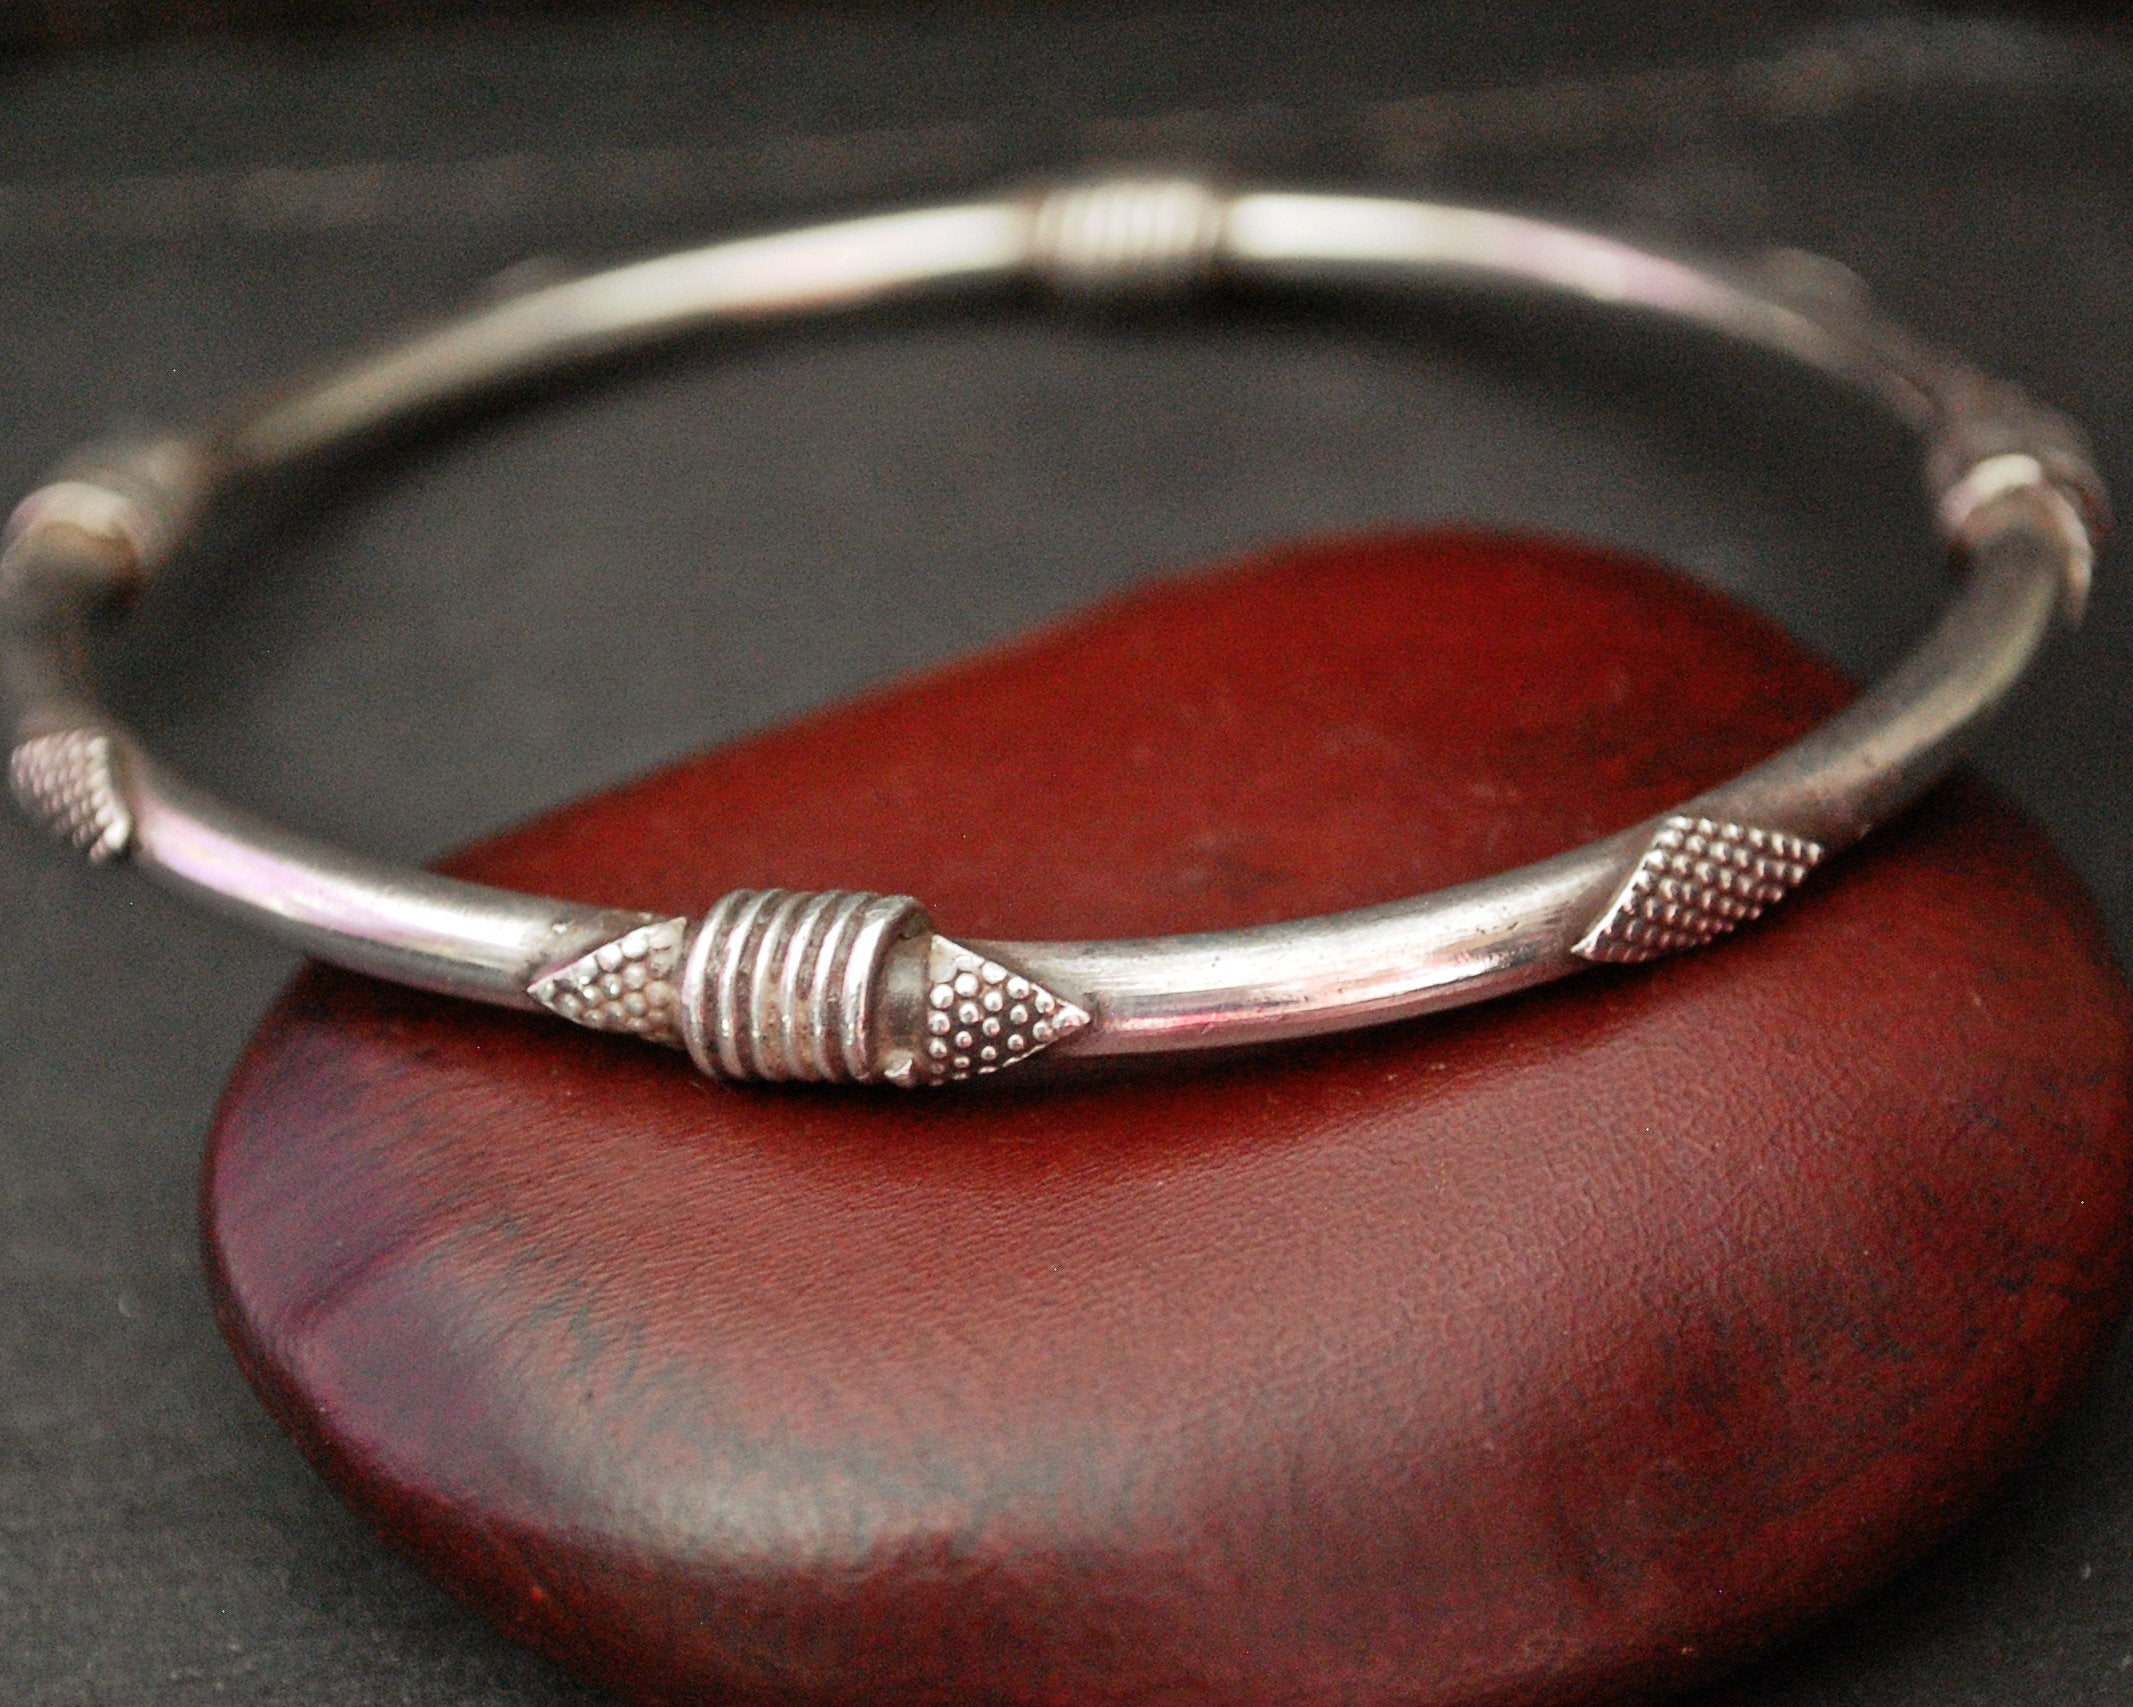 Rajasthani Silver Bangle Bracelet